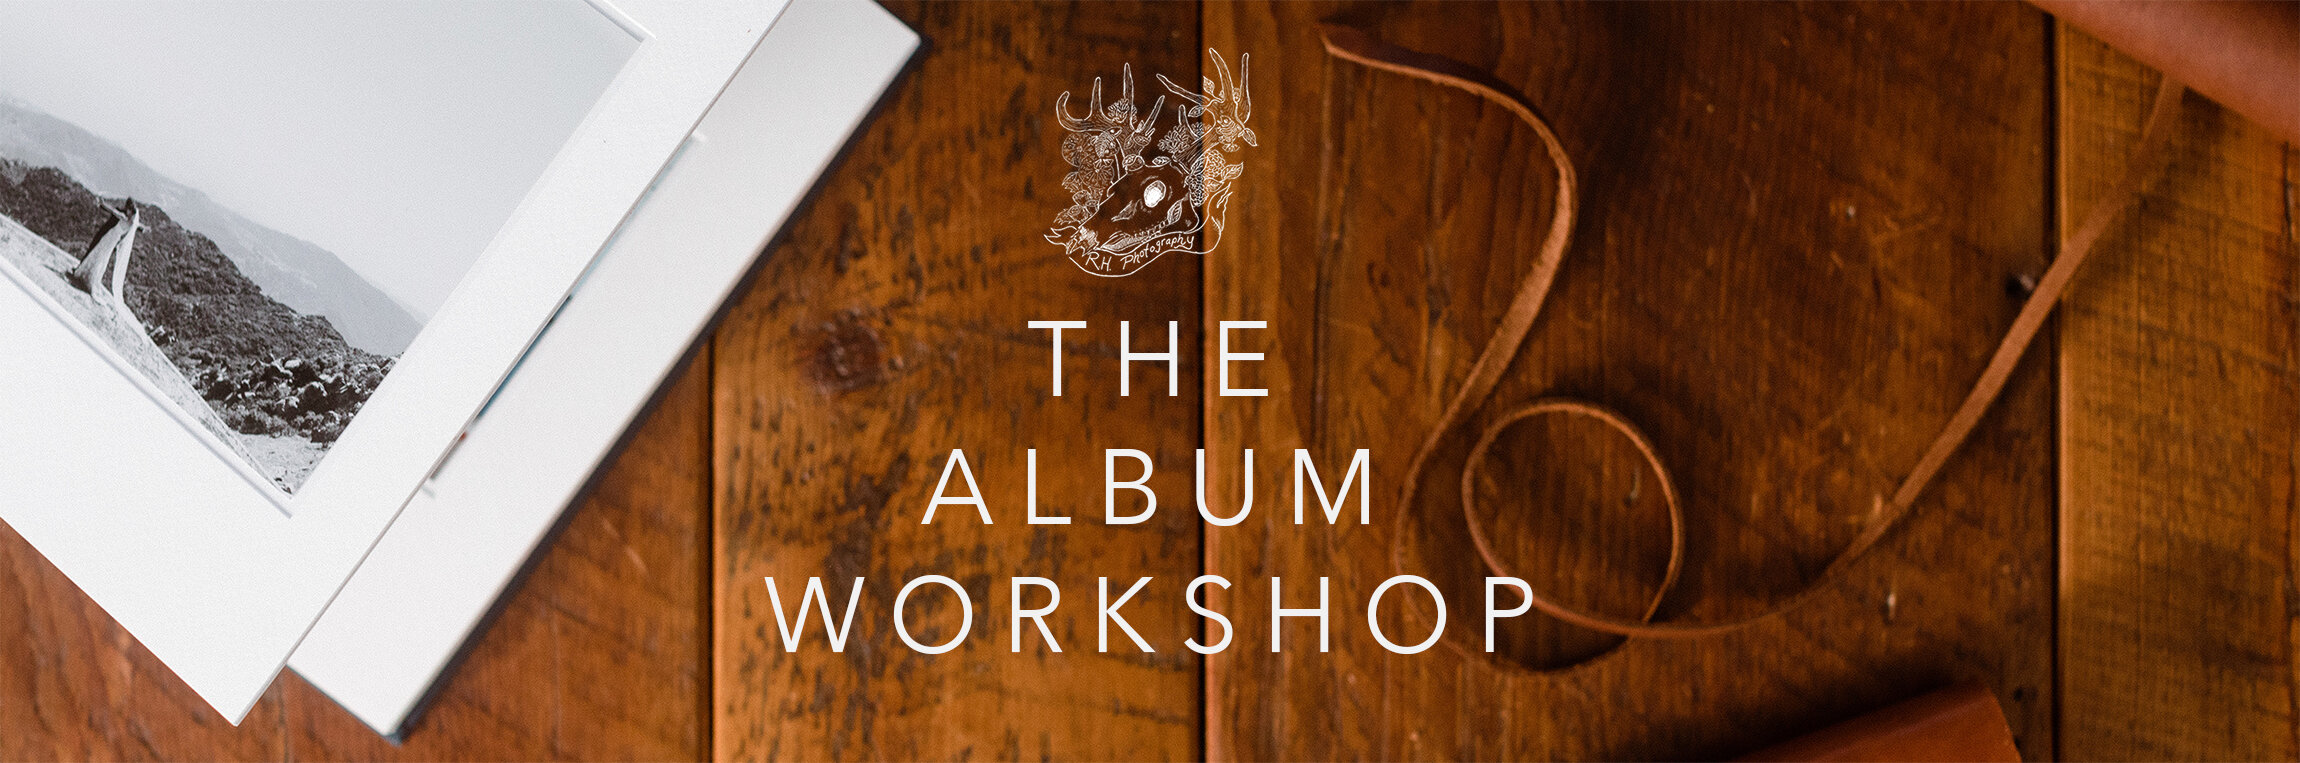 the-album-workshop-website-cover2.jpg